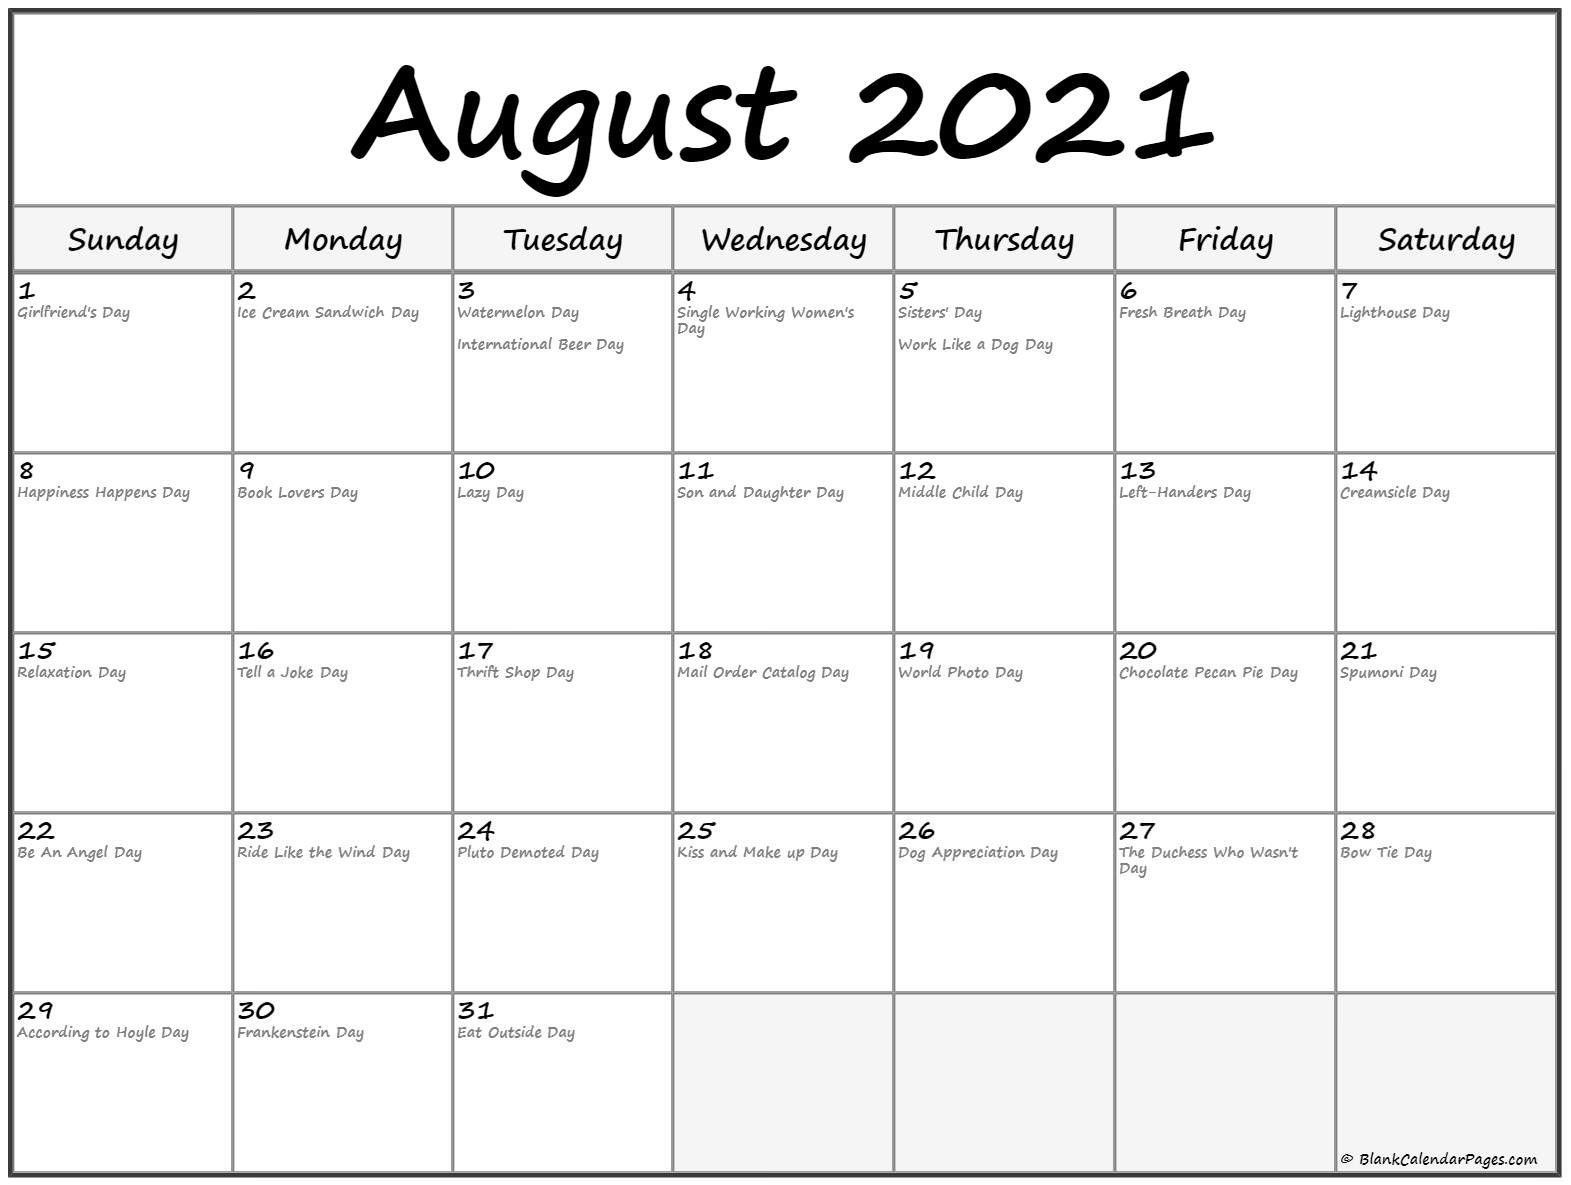 August 2021 Calendar With Holidays Free Printable August 2021 Calendar